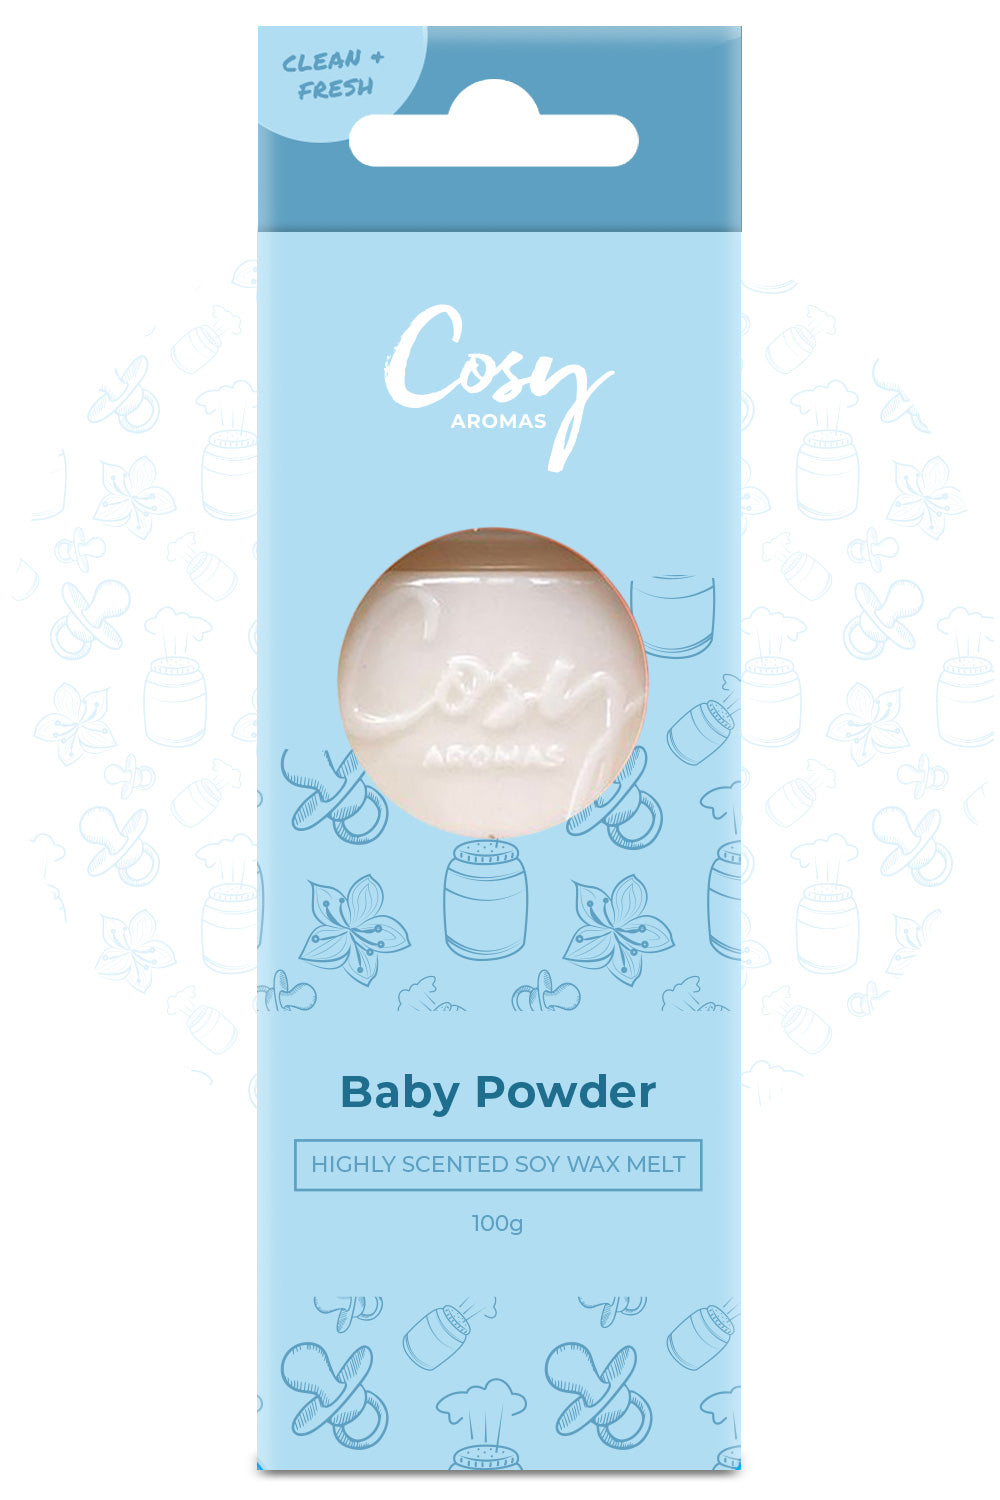 Baby Powder Wax Melt